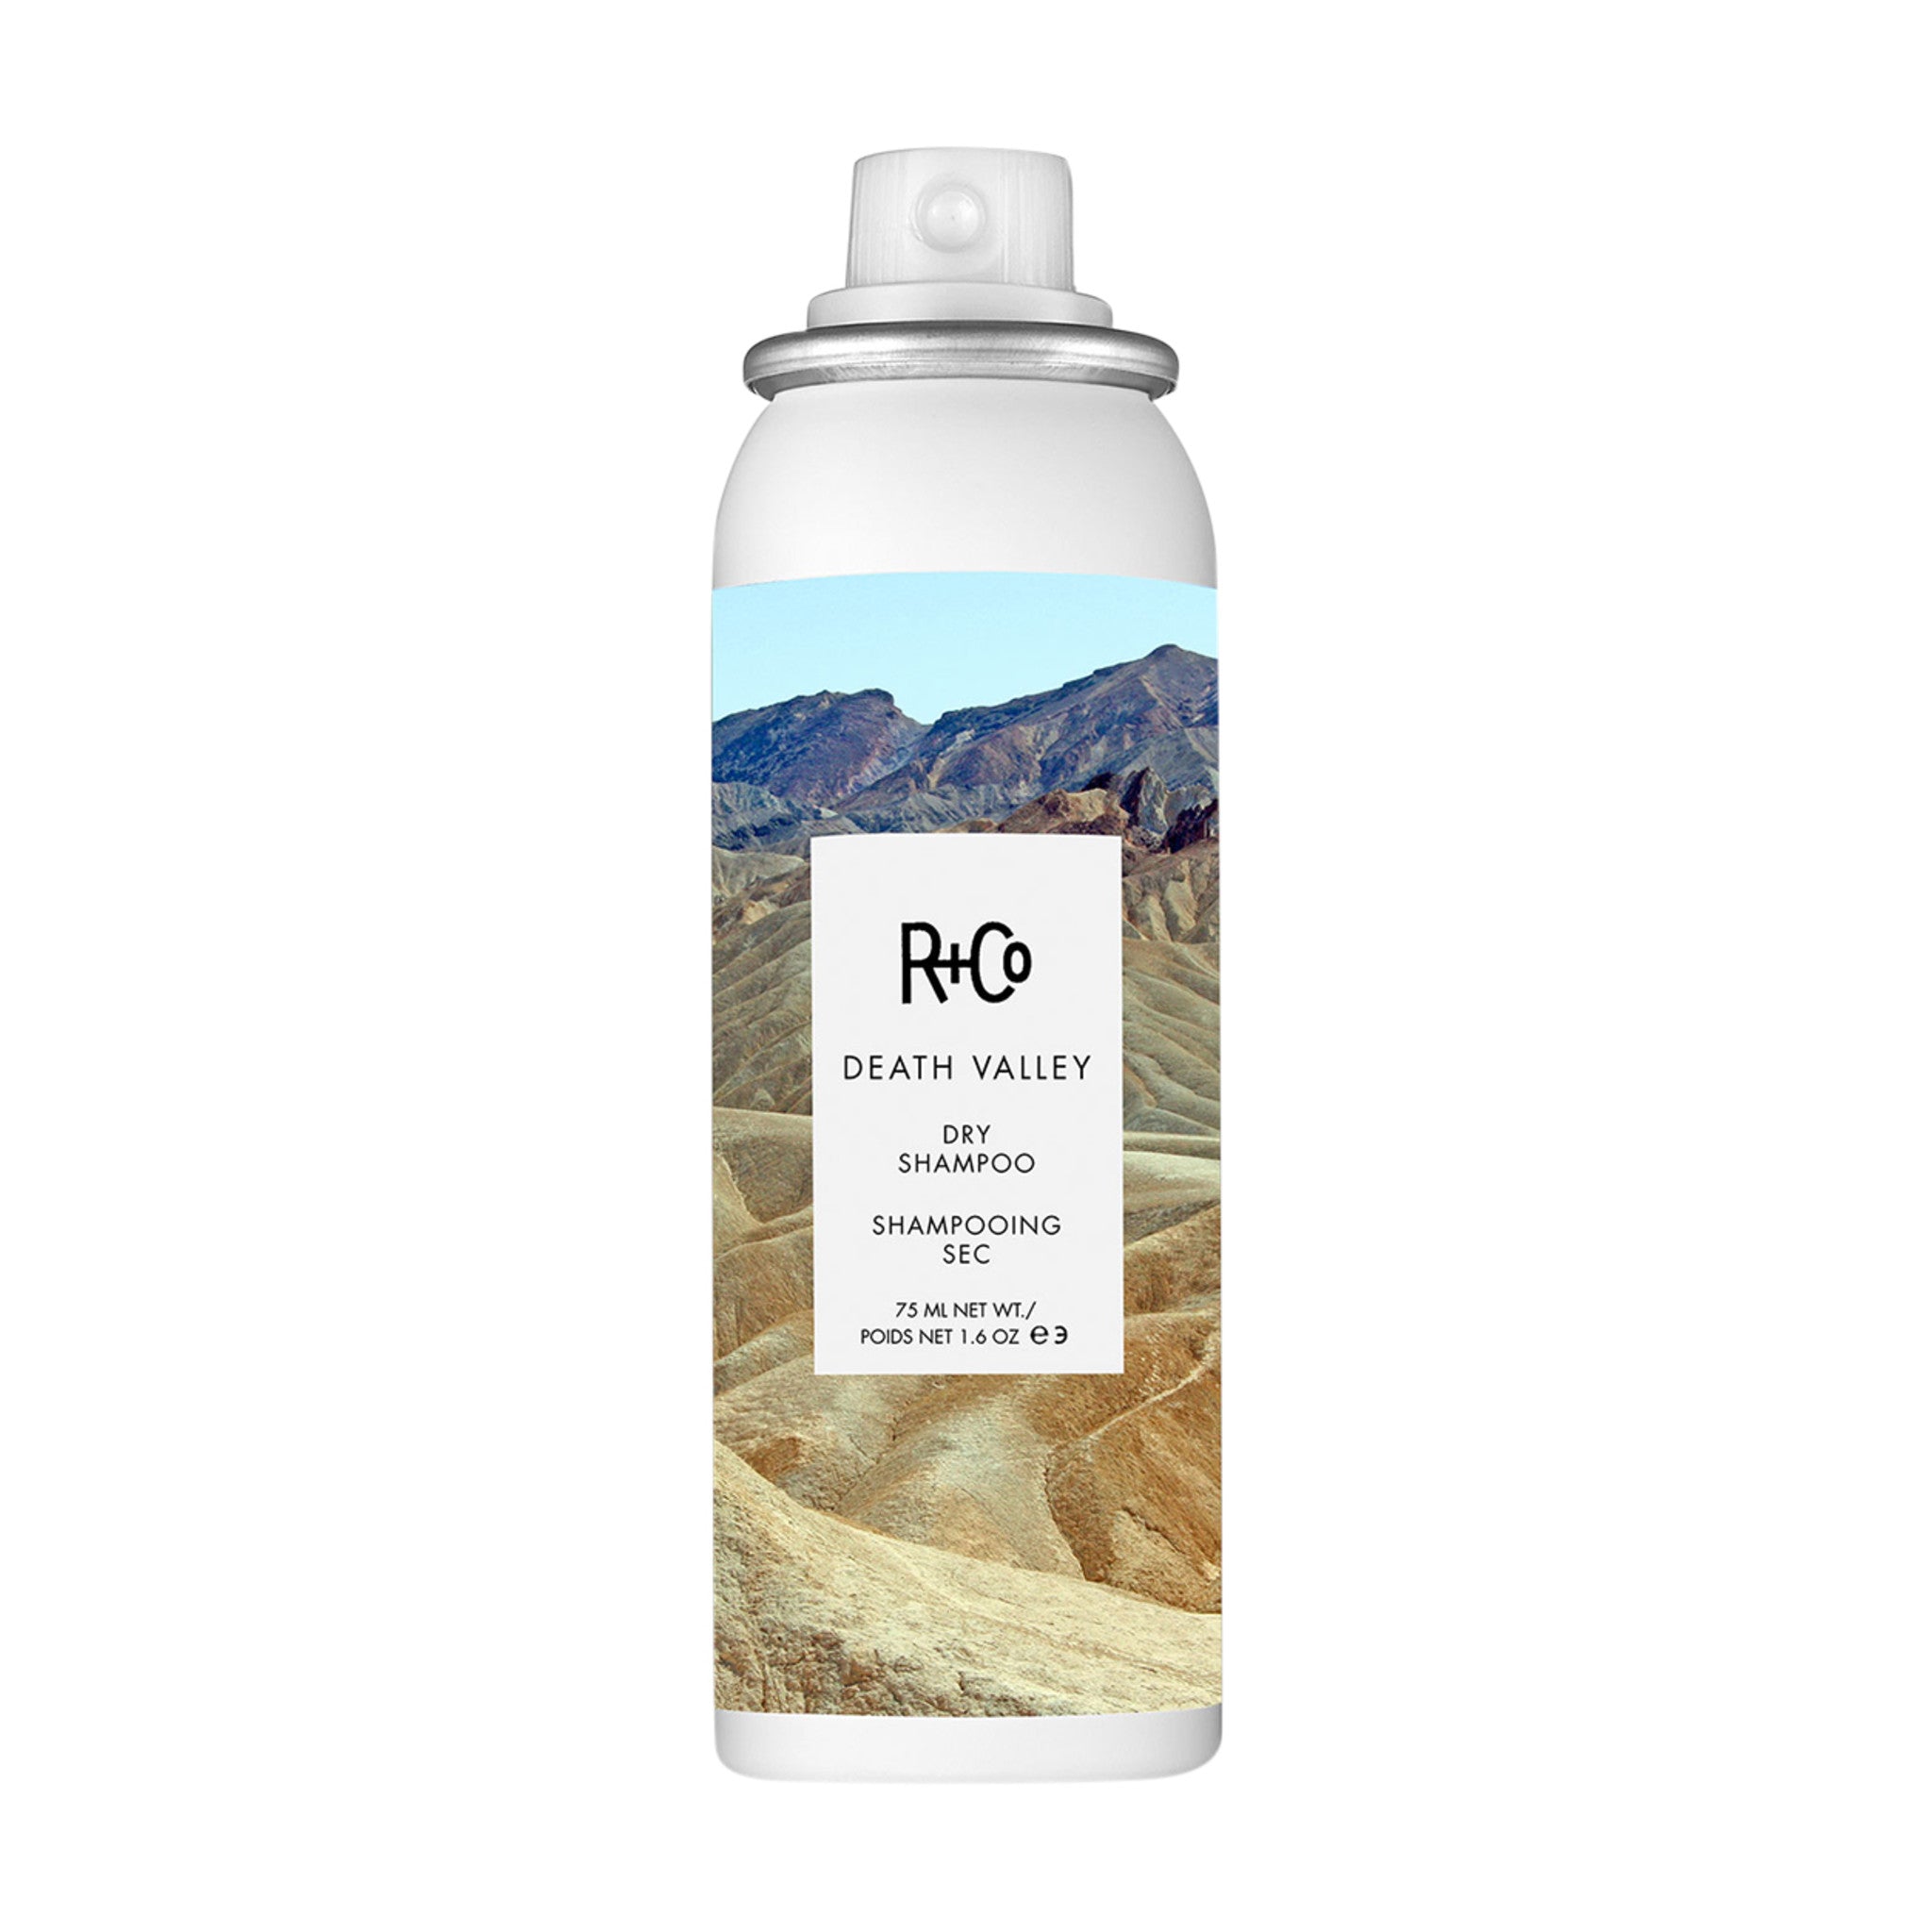 Death Valley Dry Shampoo main image.